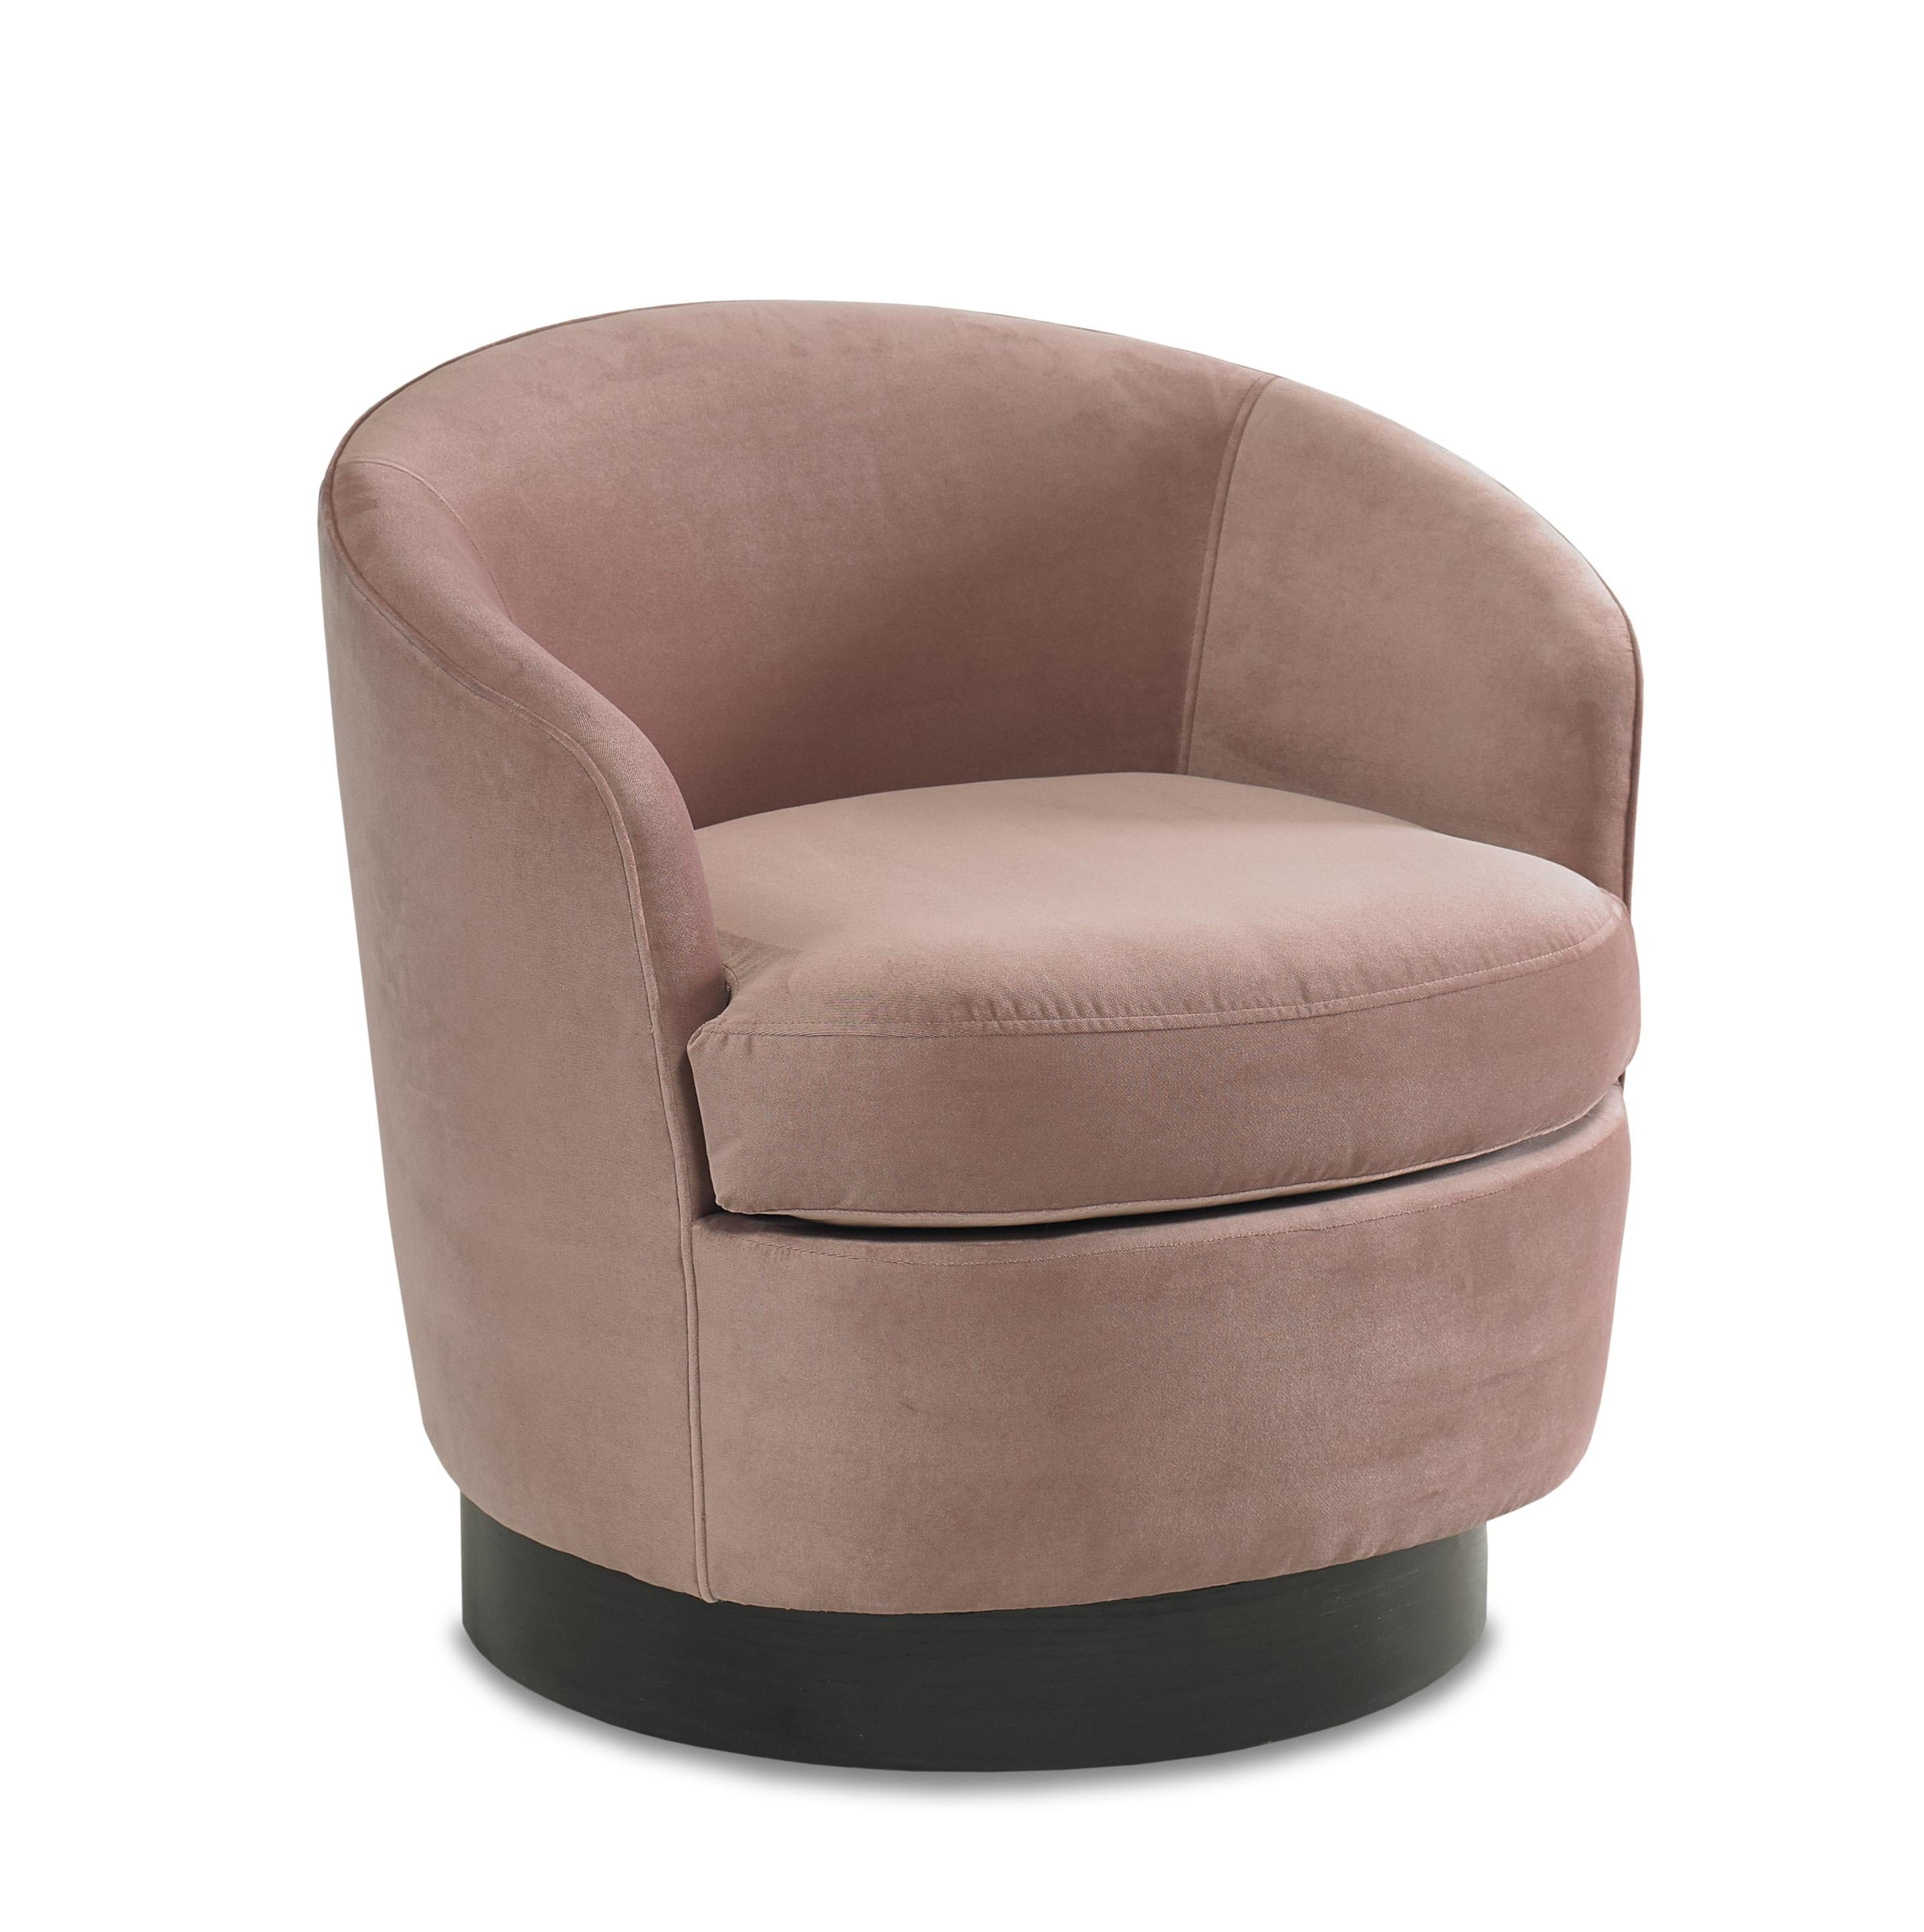 Cheap Round Swivel Chair | Swivel Chairs